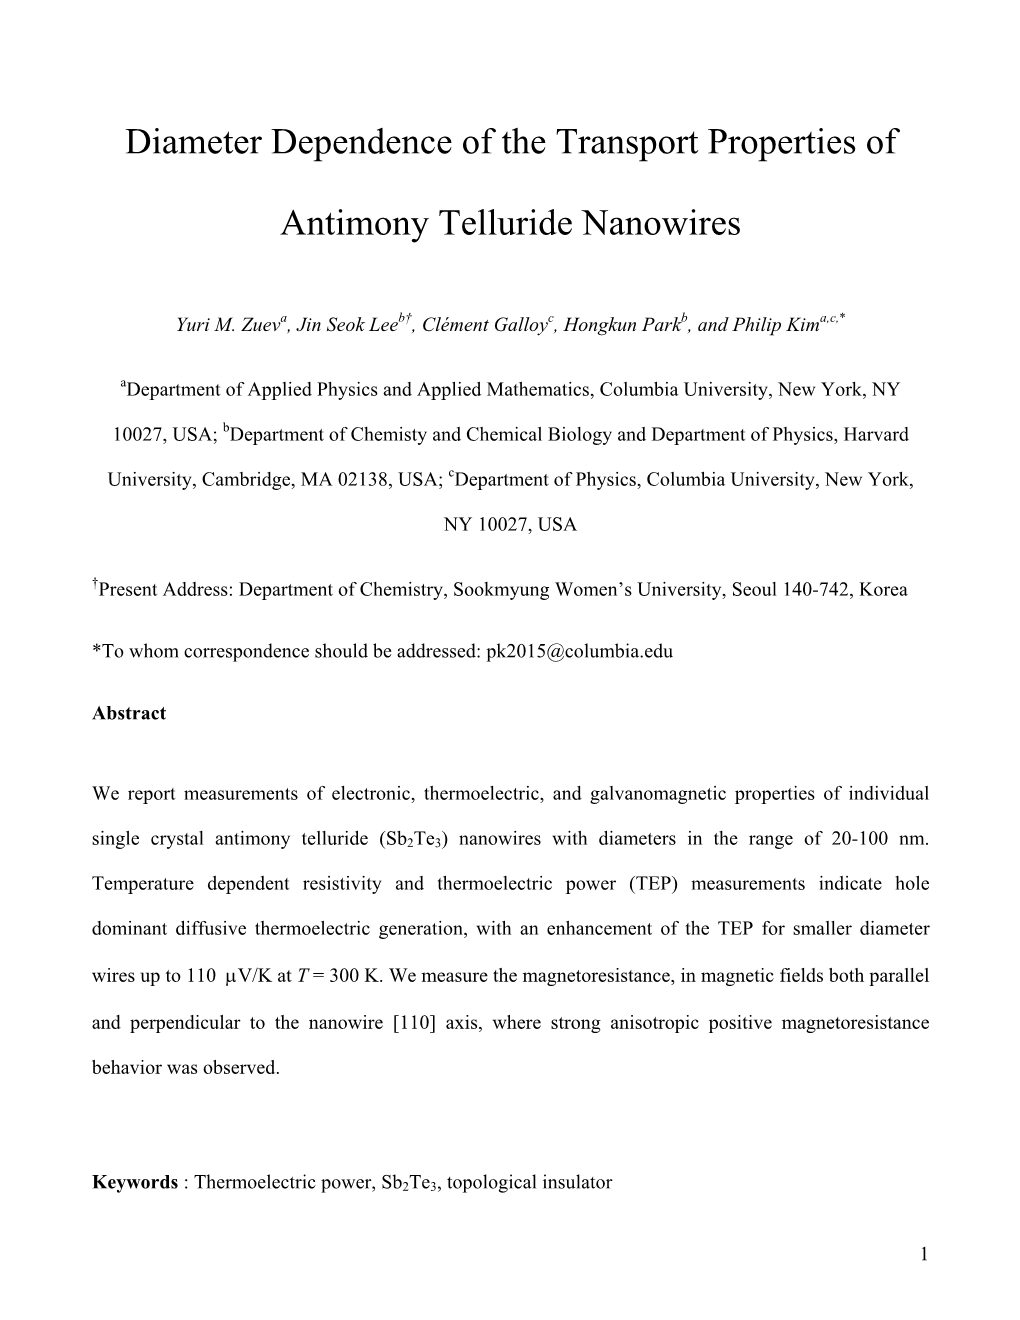 Diameter Dependence of the Transport Properties of Antimony Telluride Nanowires